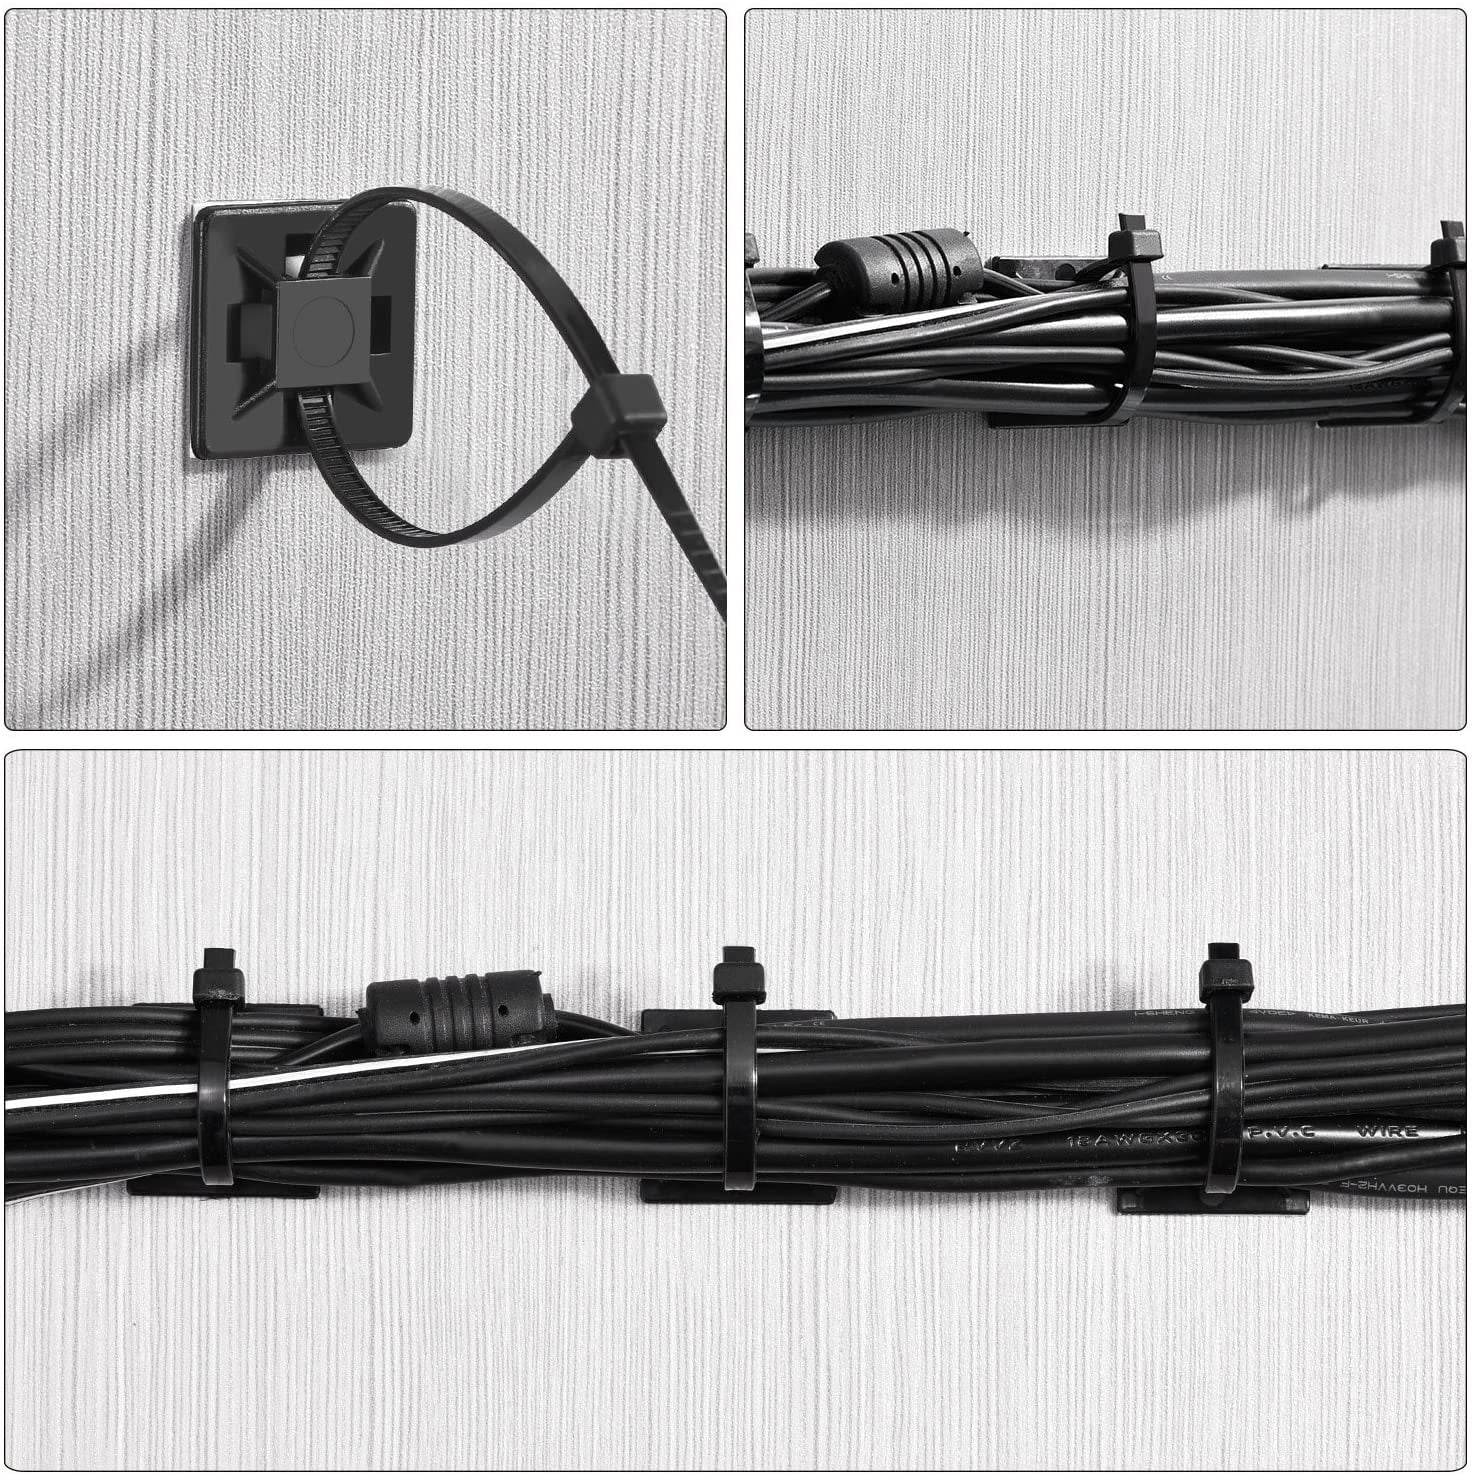 Black 150 Pieces Zip Tie Adhesive Mounts Self Adhesive Cable Tie Base Holders with Multi-Purpose Clip Zip Tie 150 mm in Length 2 cm in Width